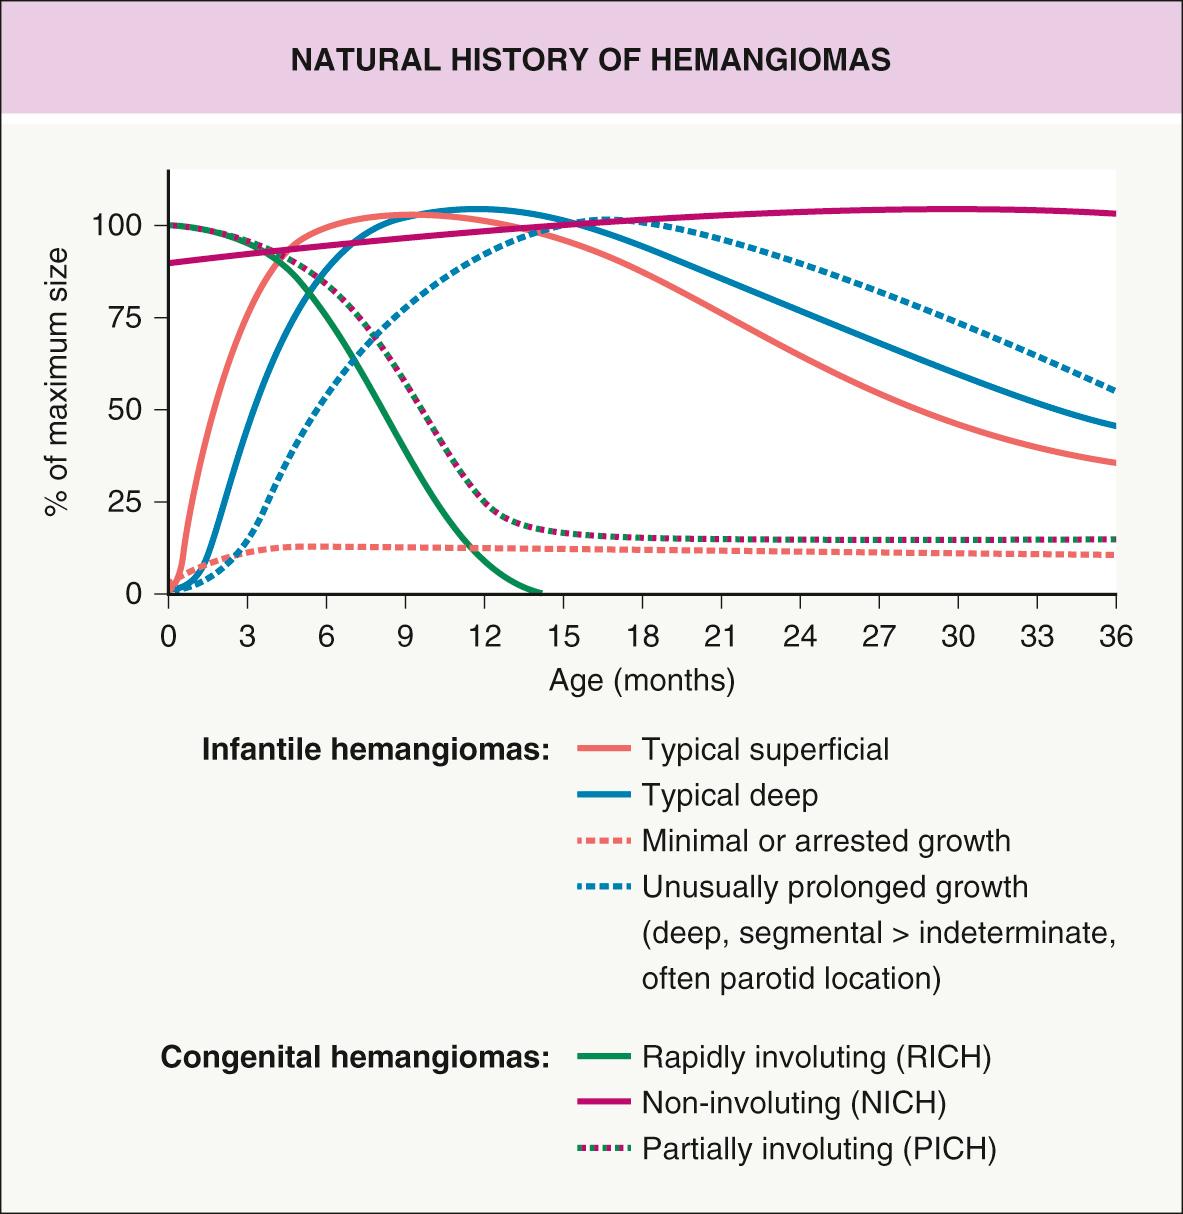 Fig. 103.7, Natural history of infantile and congenital hemangiomas.